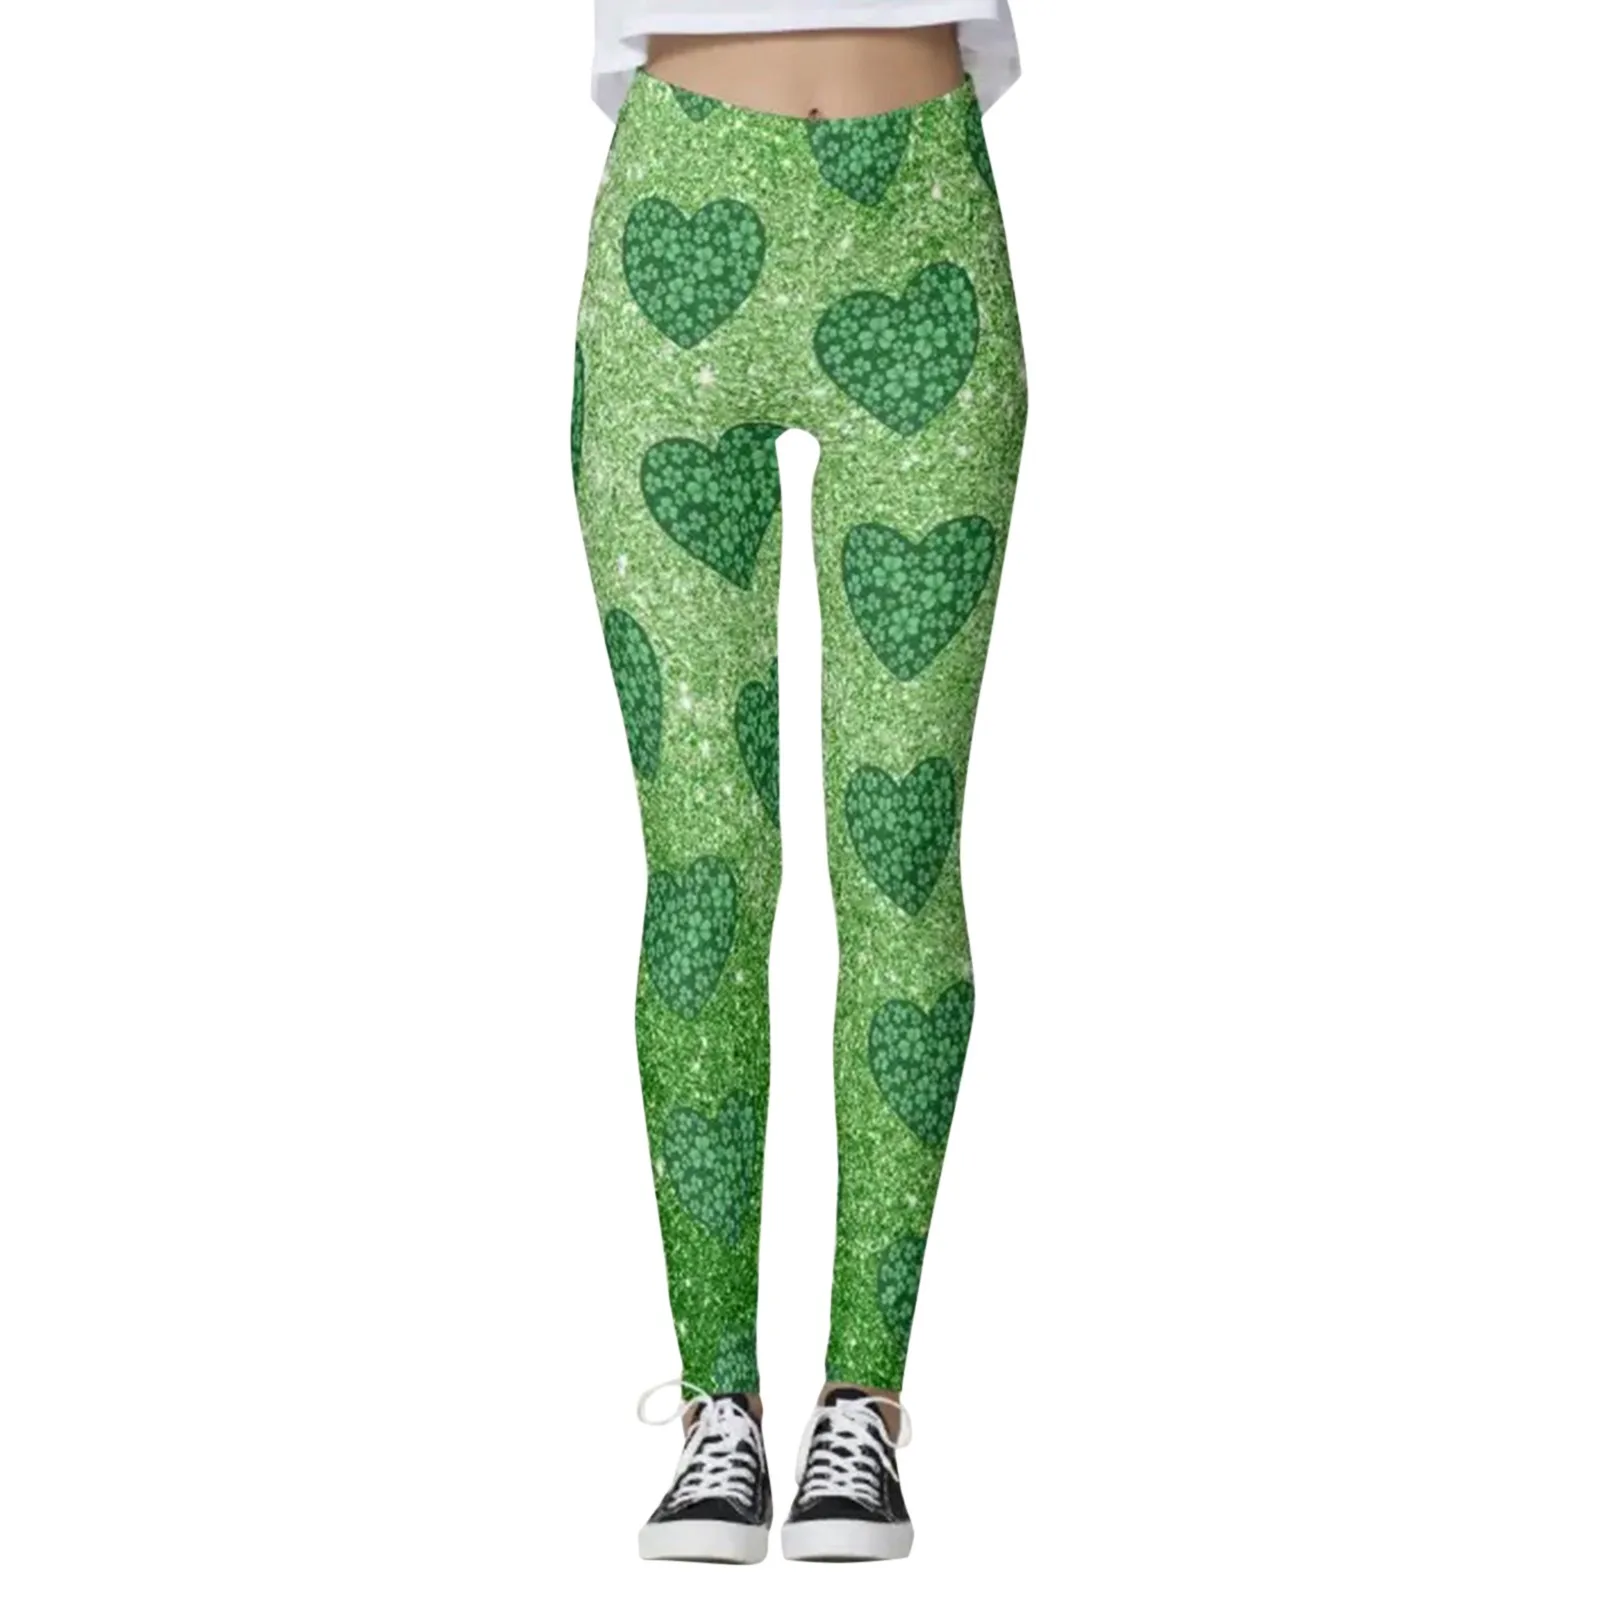 

Green Four leaf clover Printed Women's Leggings Good Luck Yoga Pants Saint Patrick's Day Skinny Sweatpants For Yoga Running